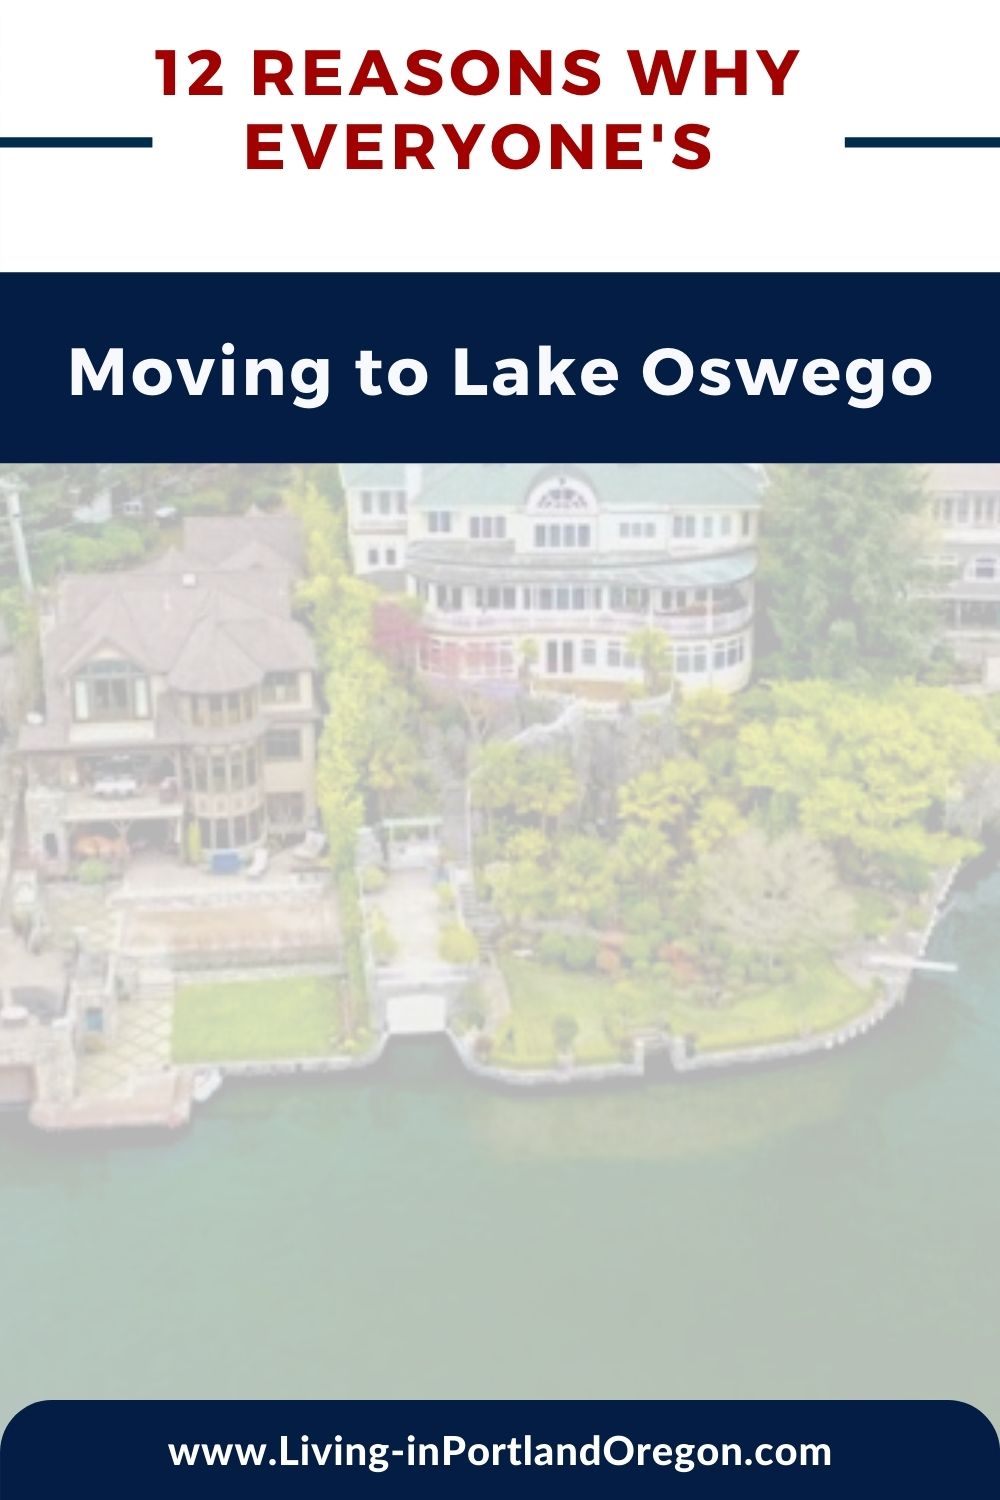 12 Reasons to move to Lake Oswego Oregon, Living in Portland Oregon real estate